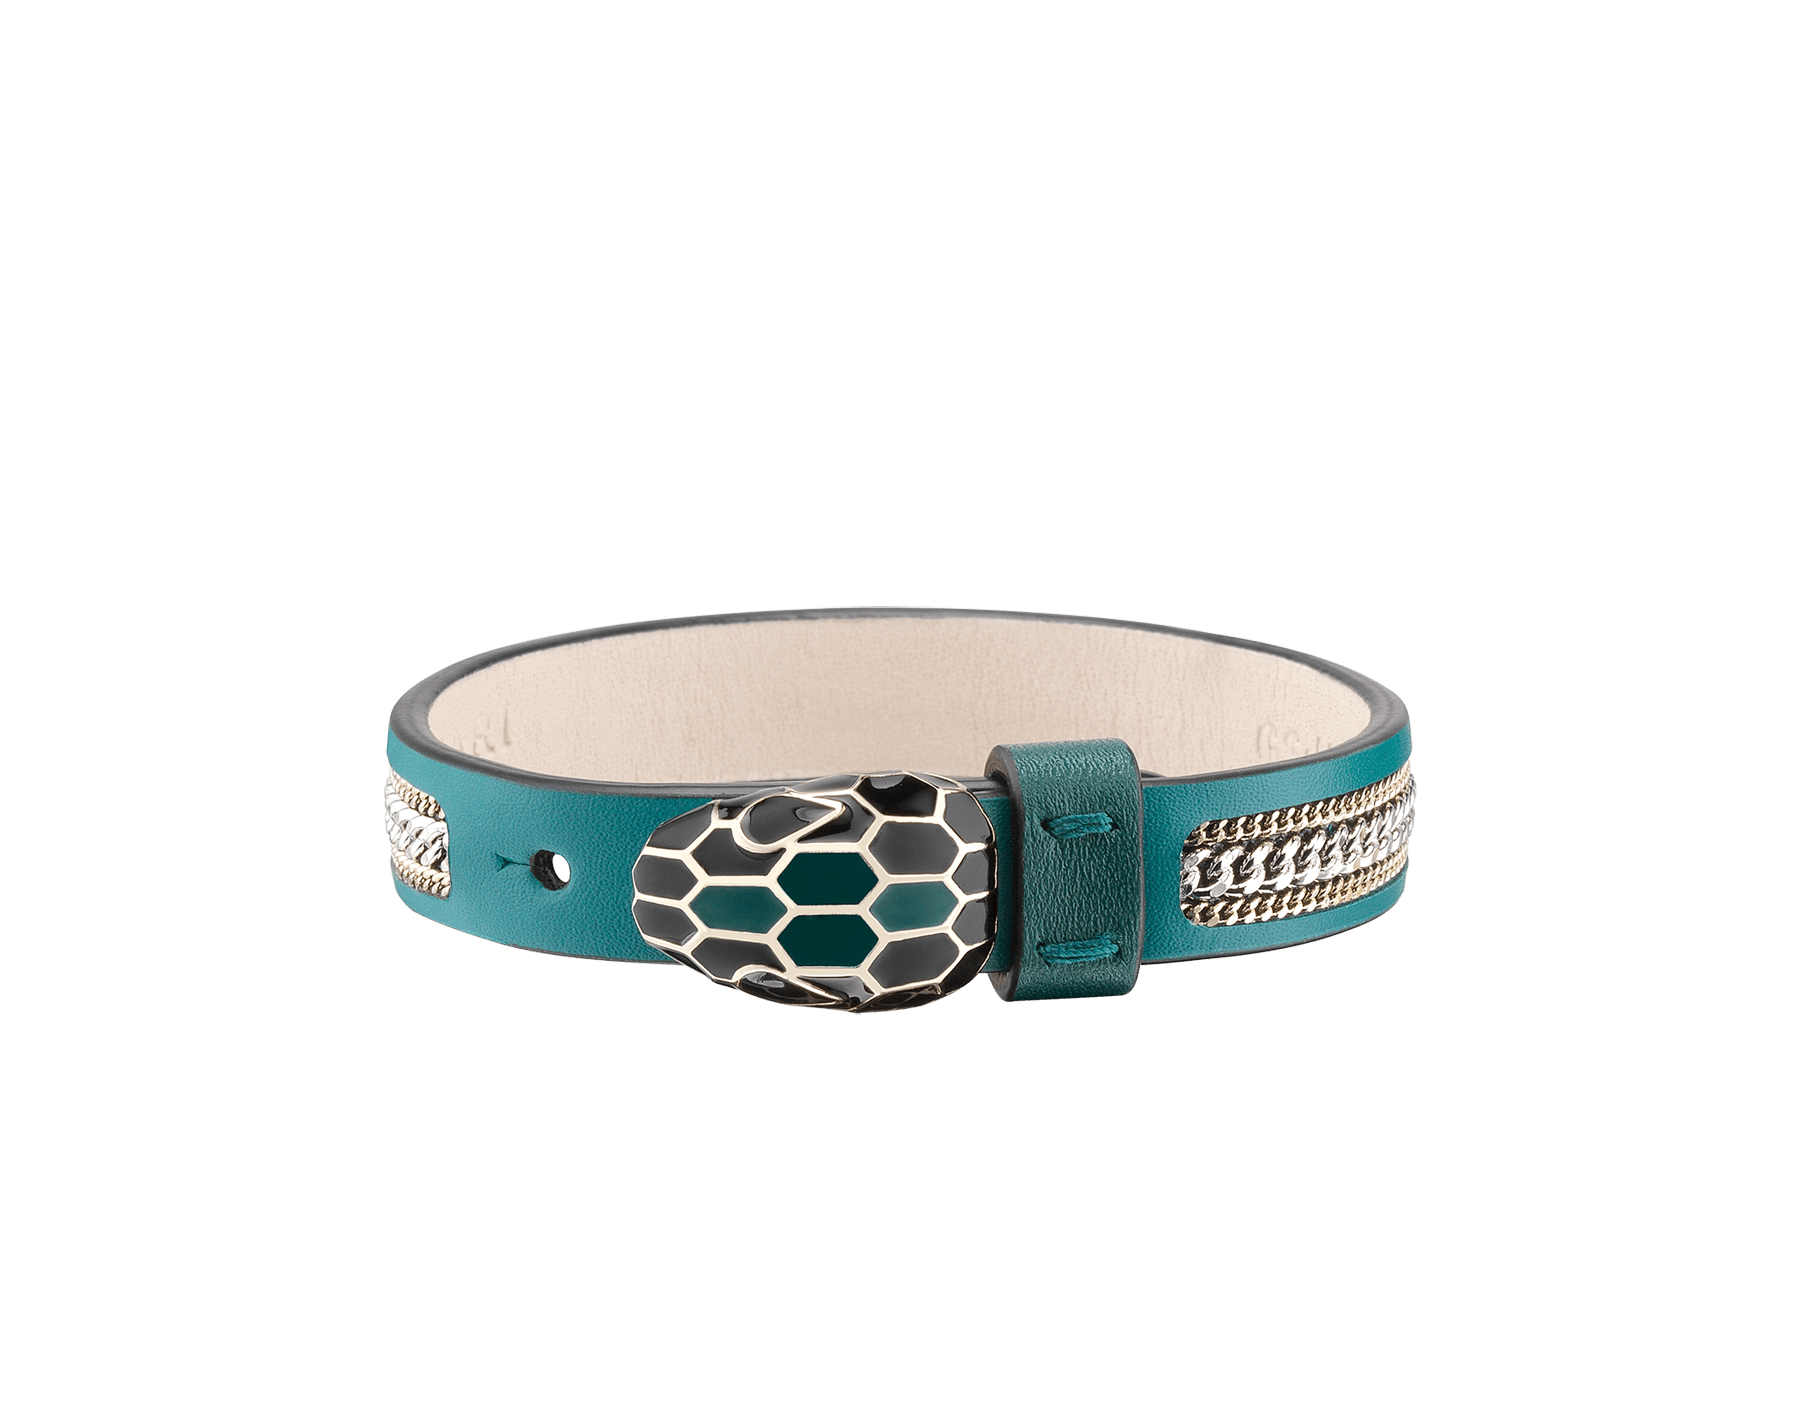 bvlgari snake bracelet leather